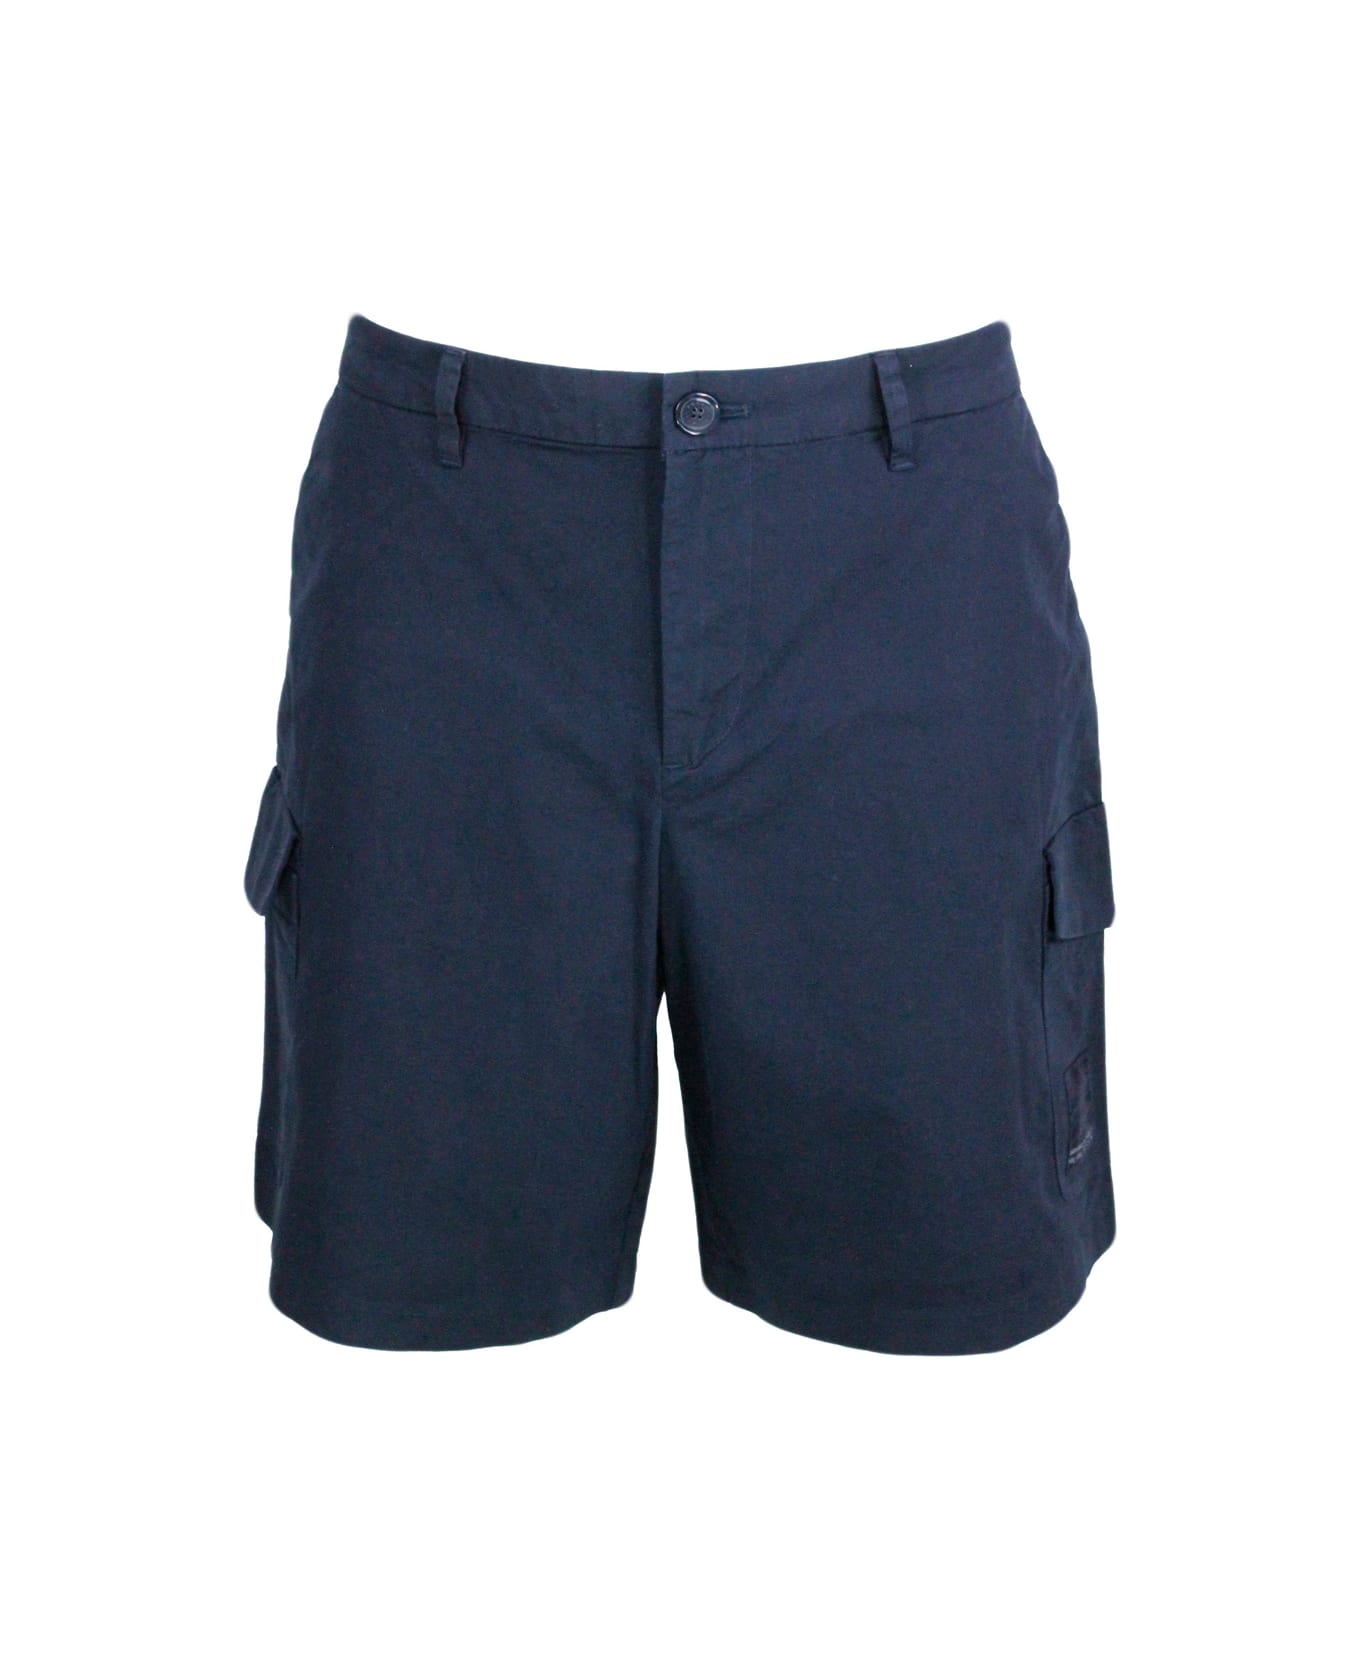 Armani Collezioni Stretch Cotton Bermuda Shorts, Cargo Model With Large Pockets On The Leg And Zip And Button Closure - Blu ショートパンツ